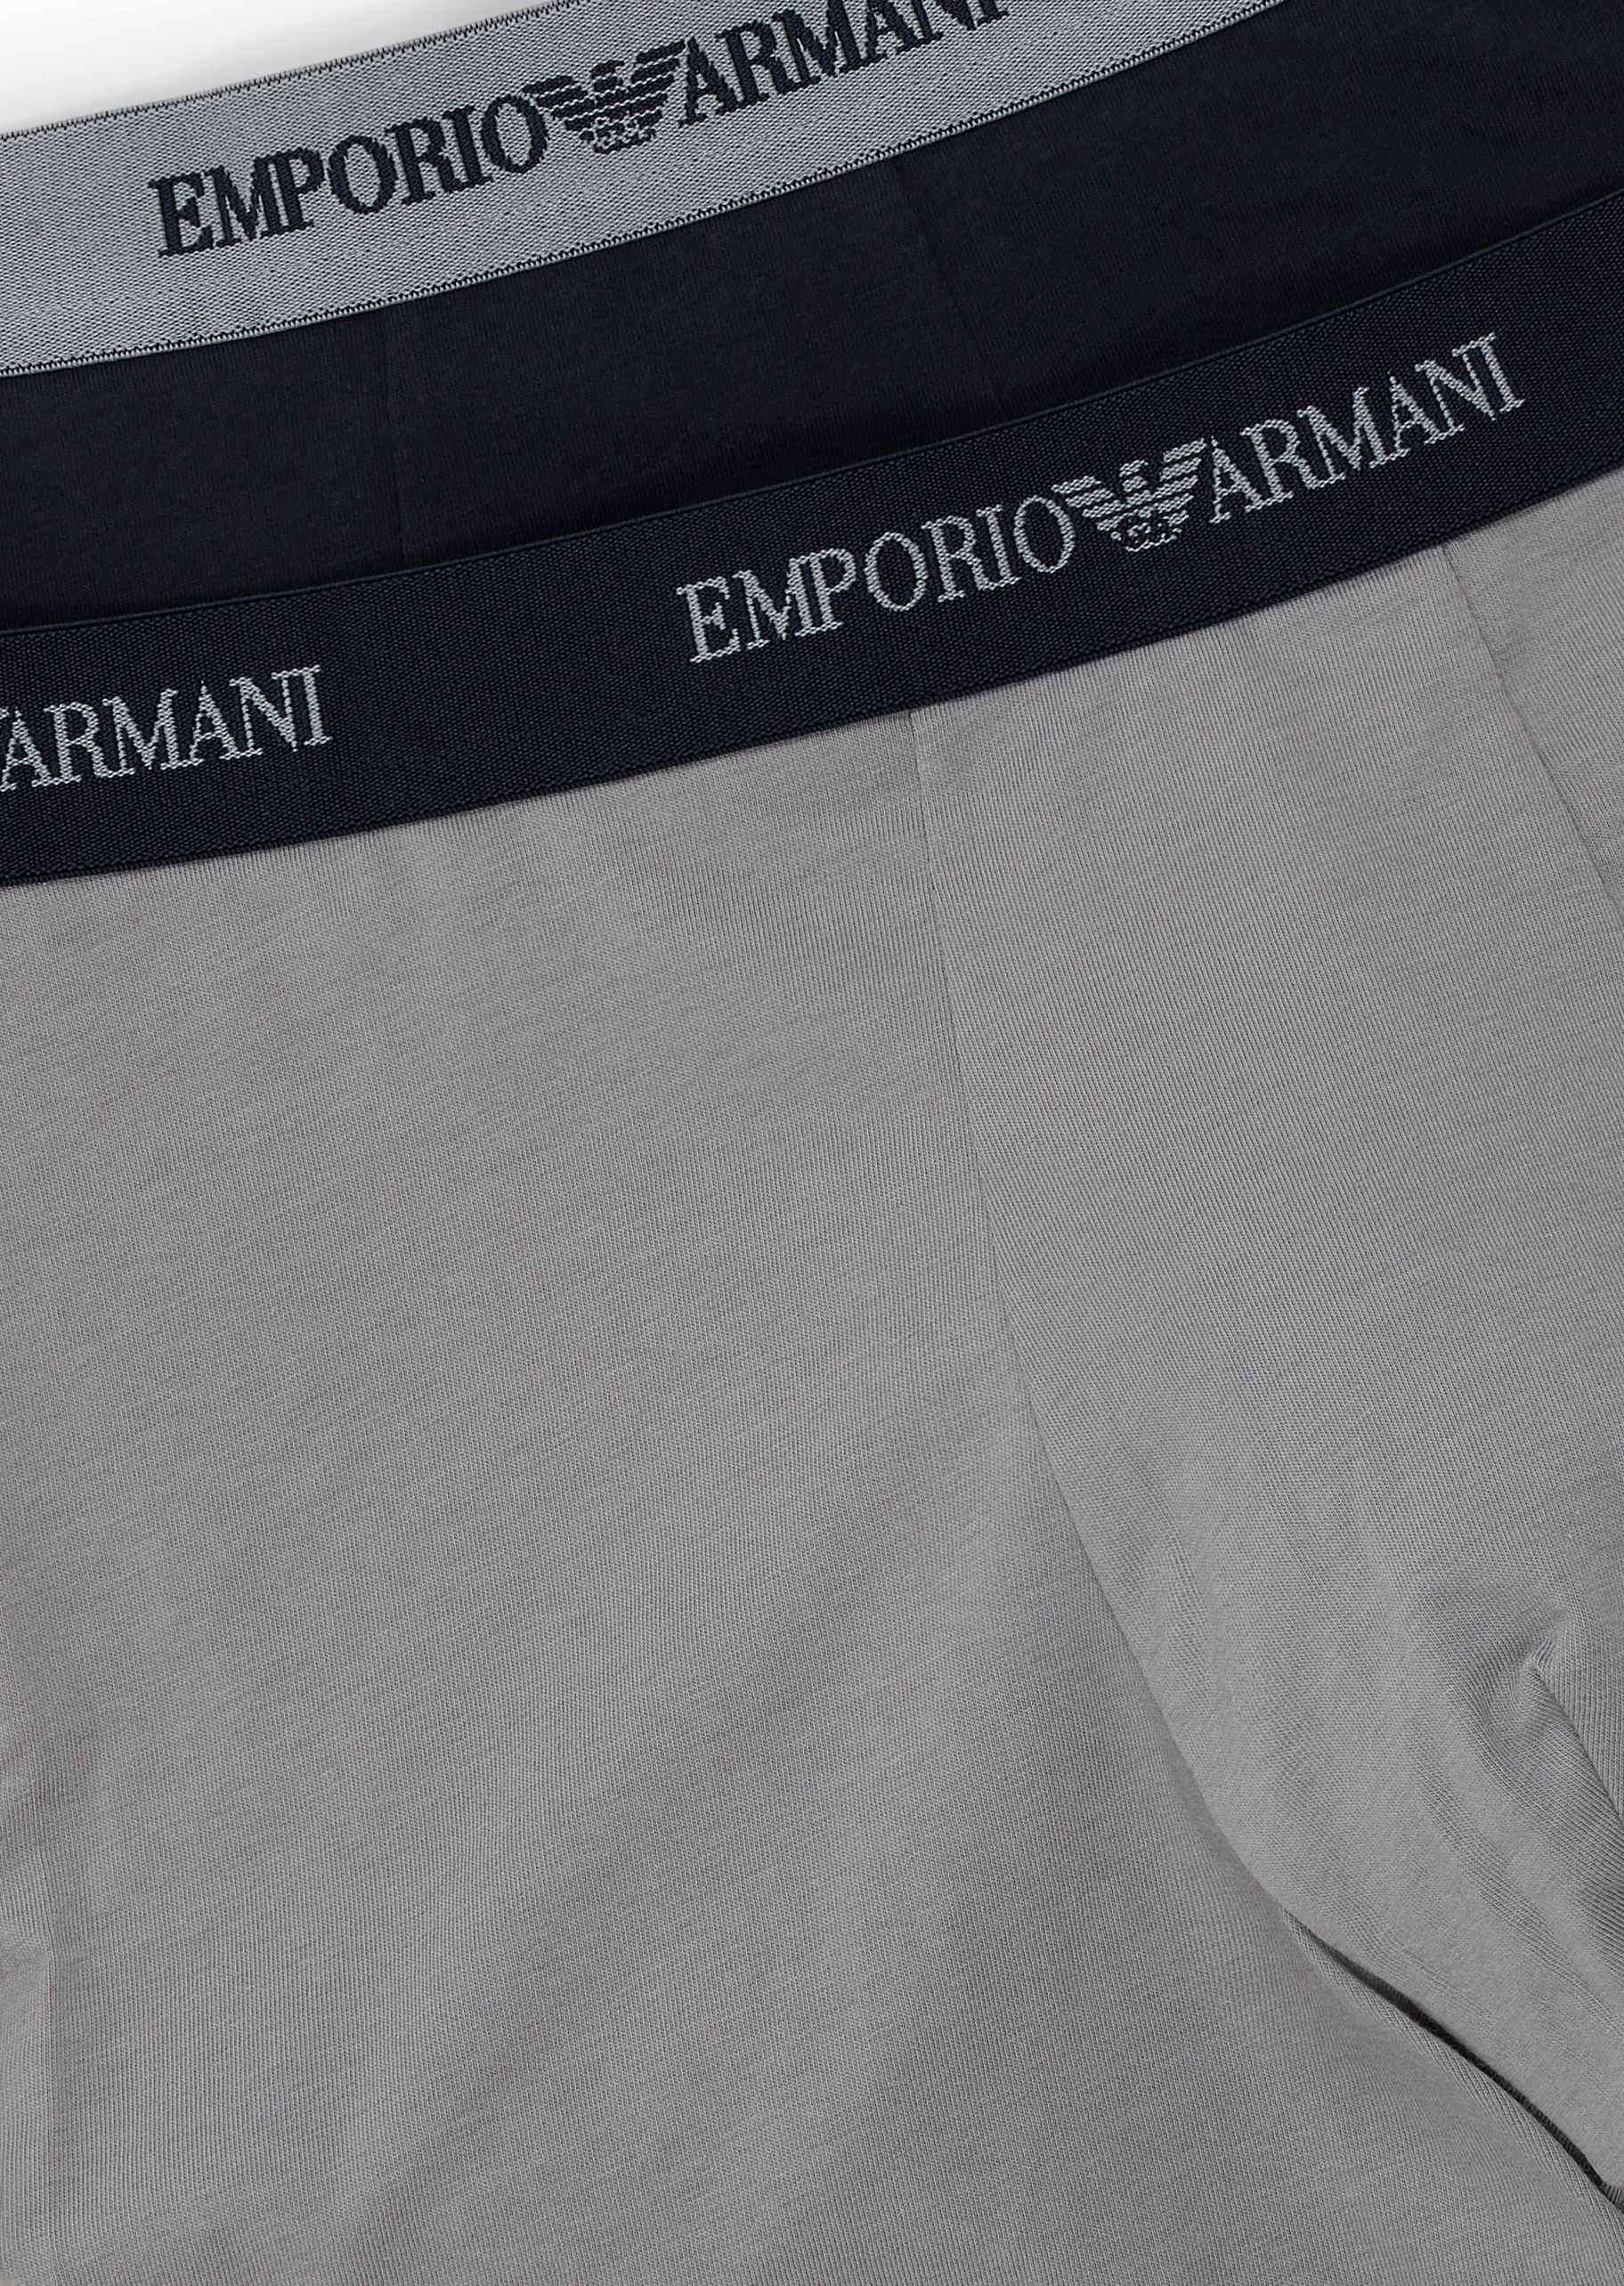 Emporio Armani 男士纯棉弹力合身松紧腰平角两条装内裤套装